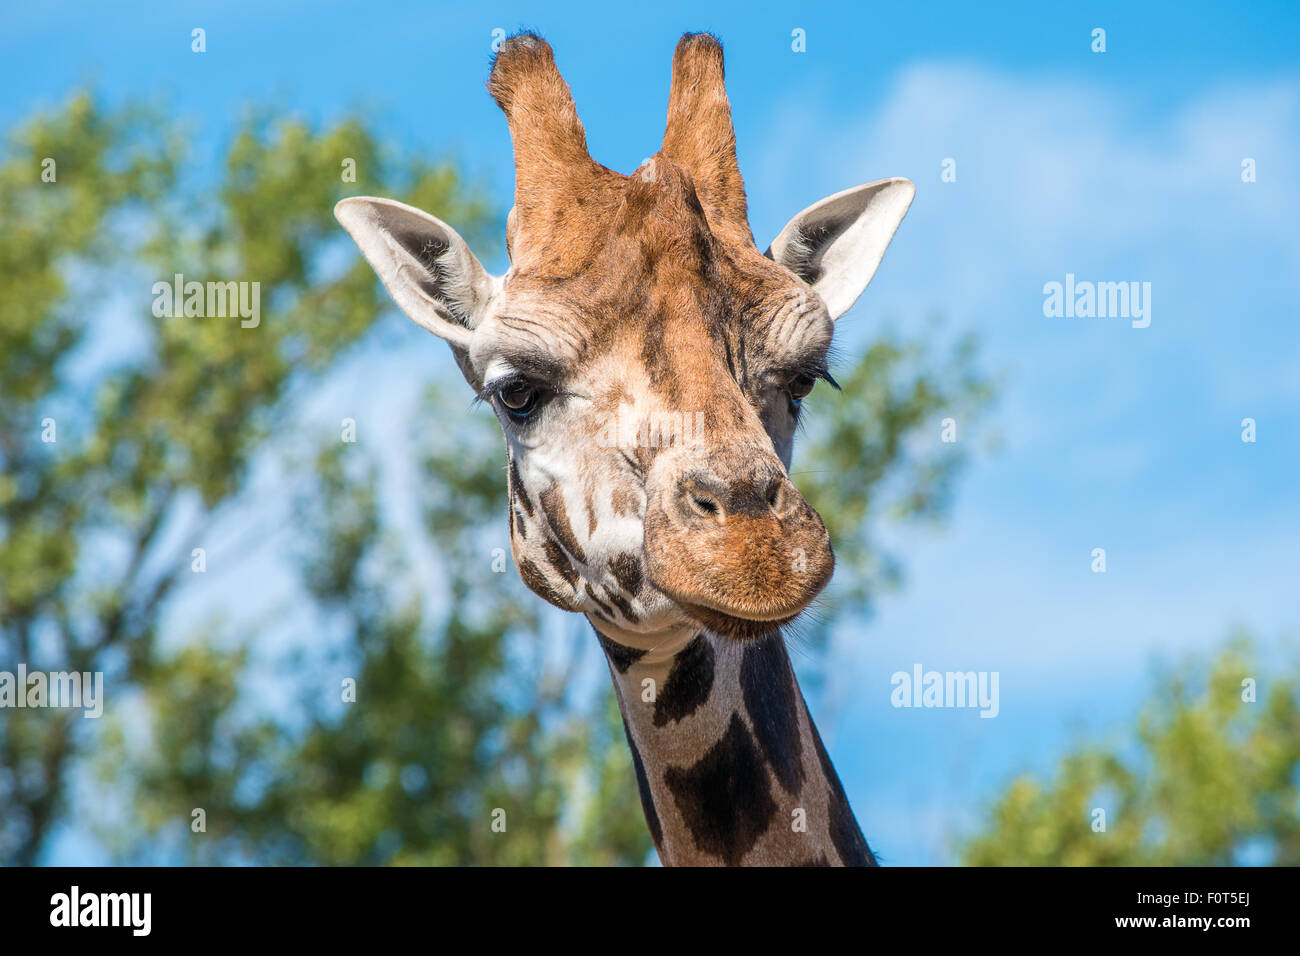 Close up photo of a Rothschild Giraffe head Stock Photo